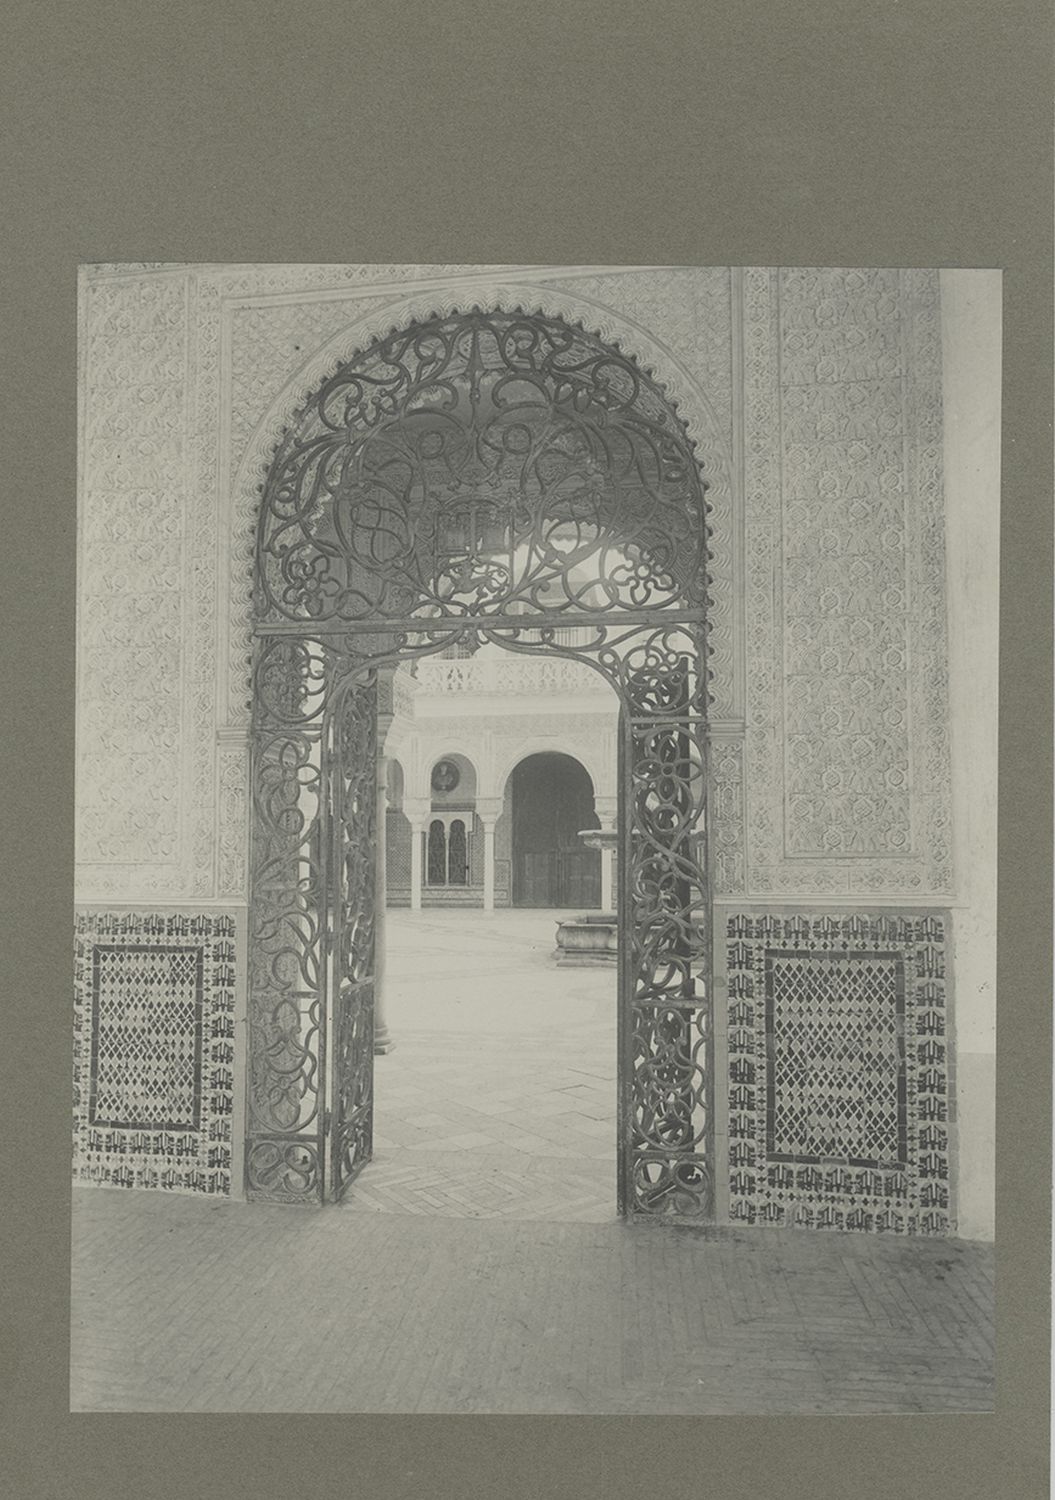 Casa de Pilatos - View through arched doorway onto courtyard.